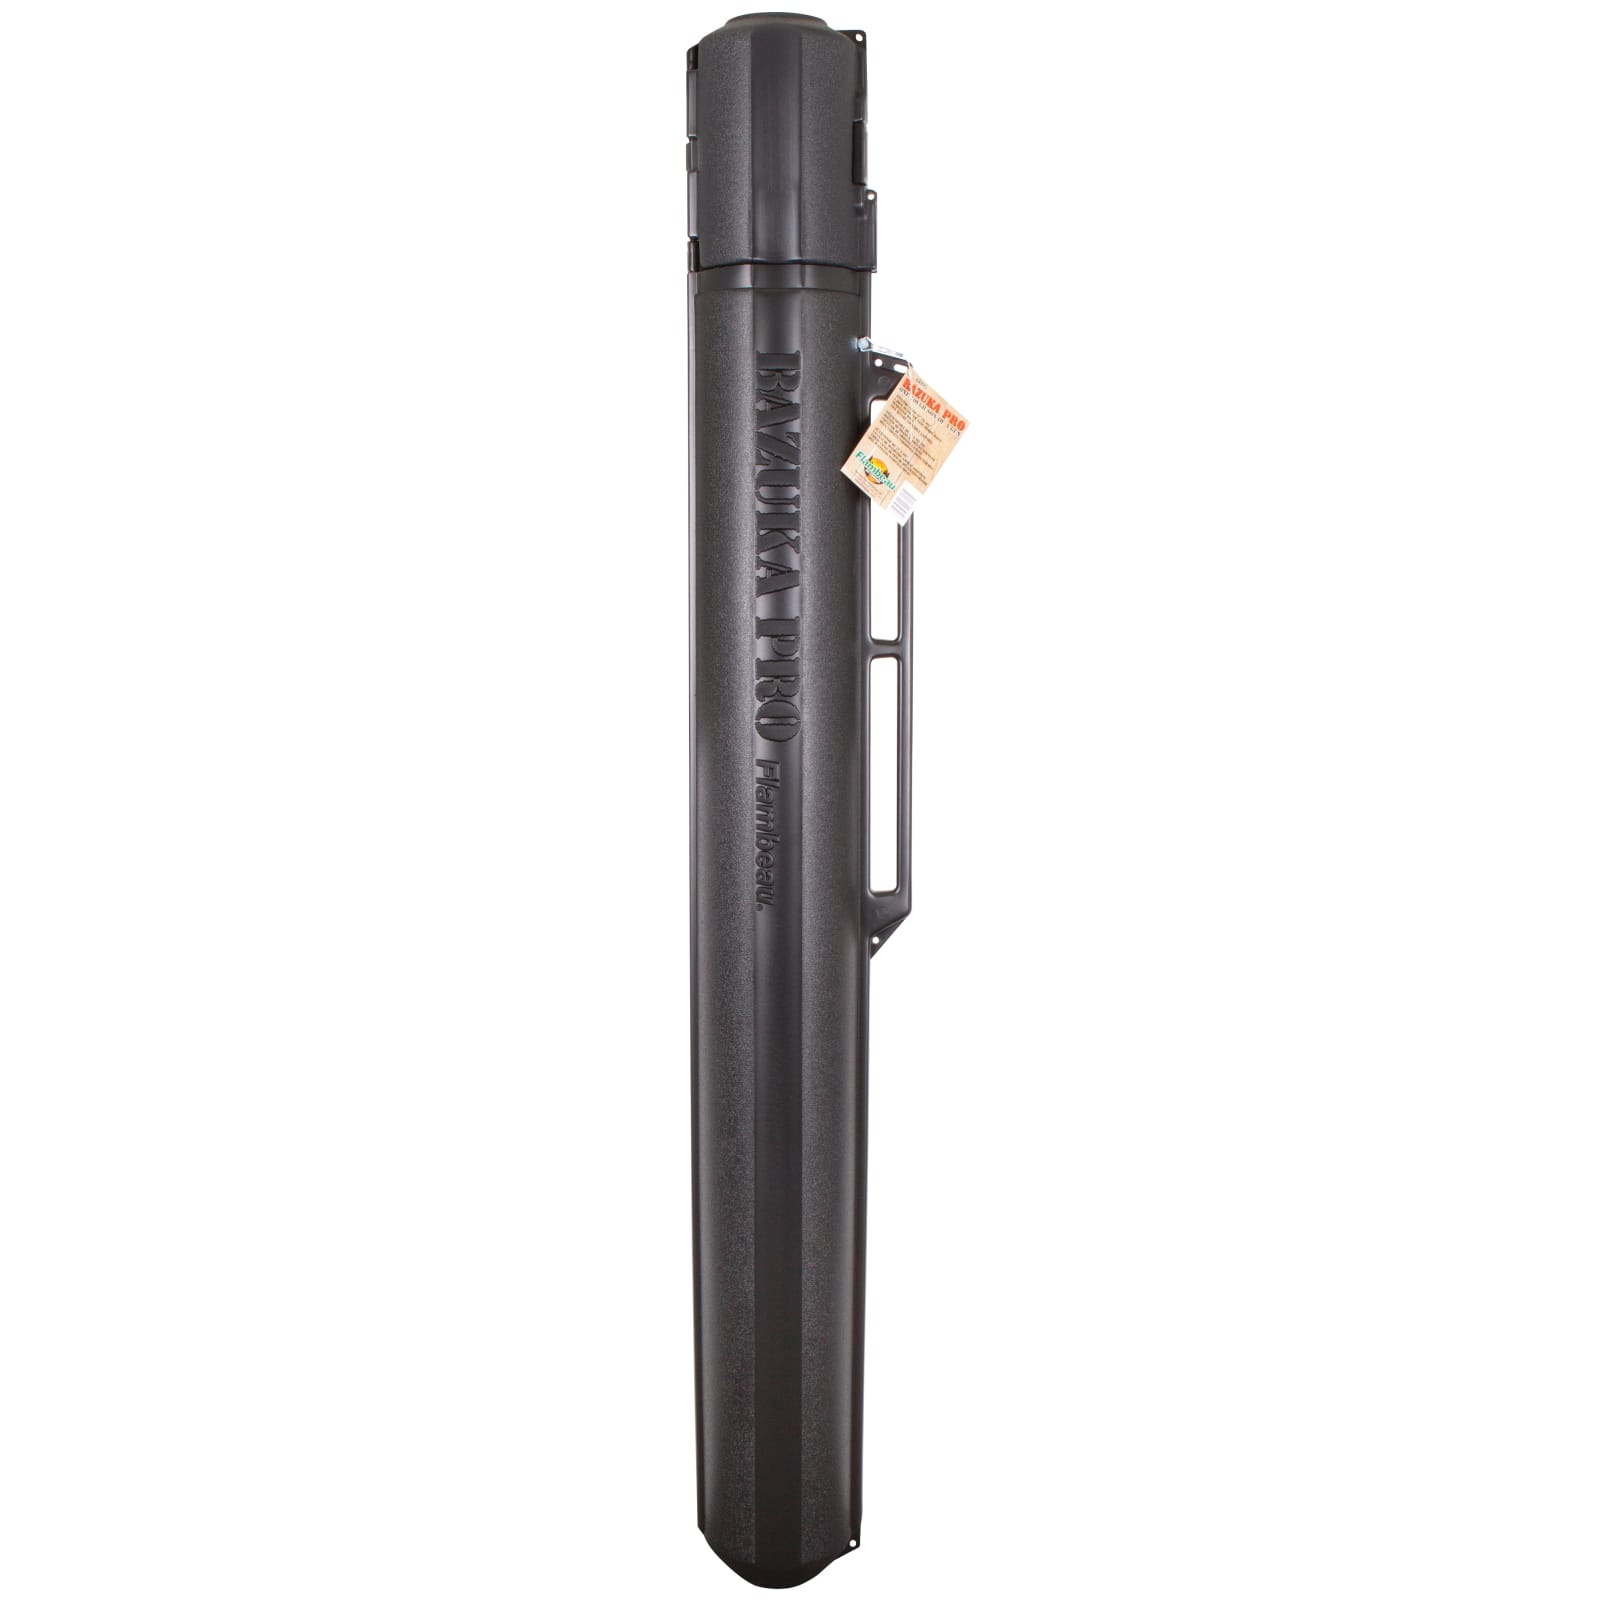 Flambeau Bazuka Pro Tube Rod Case - Black, 73-102in